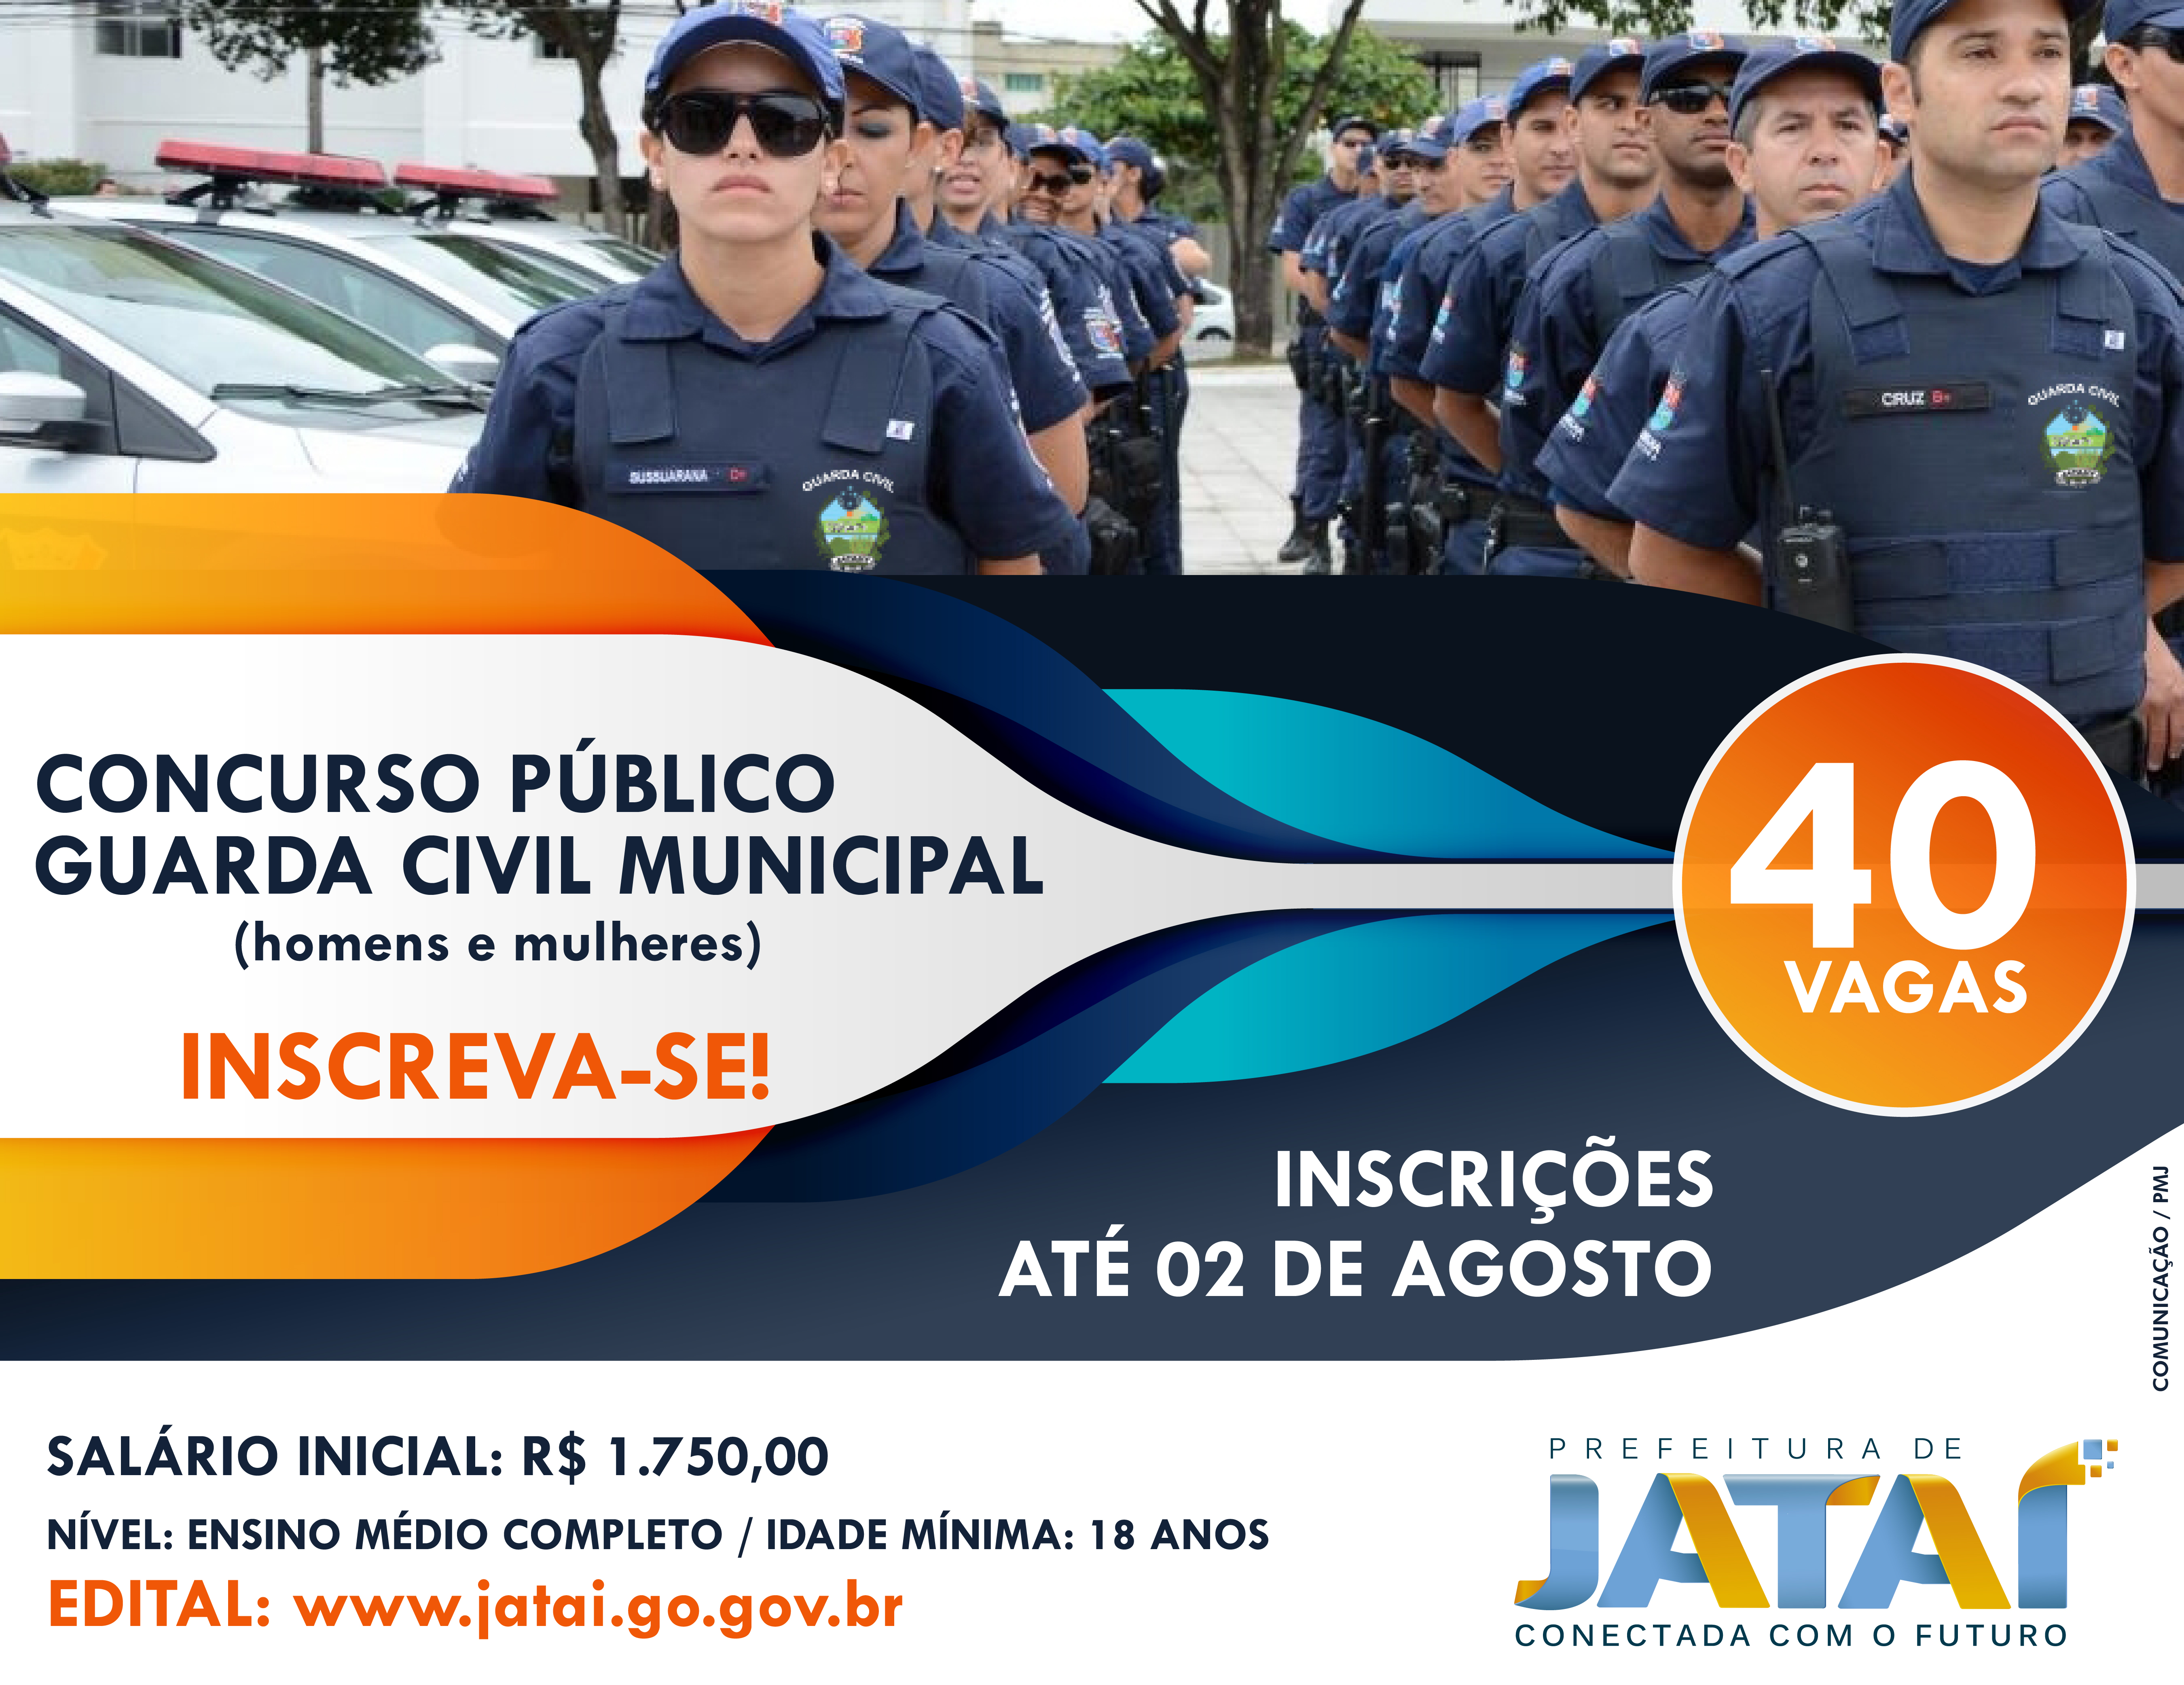 Guarda Municipal de Serra/ES - Como ser aprovado no concurso 